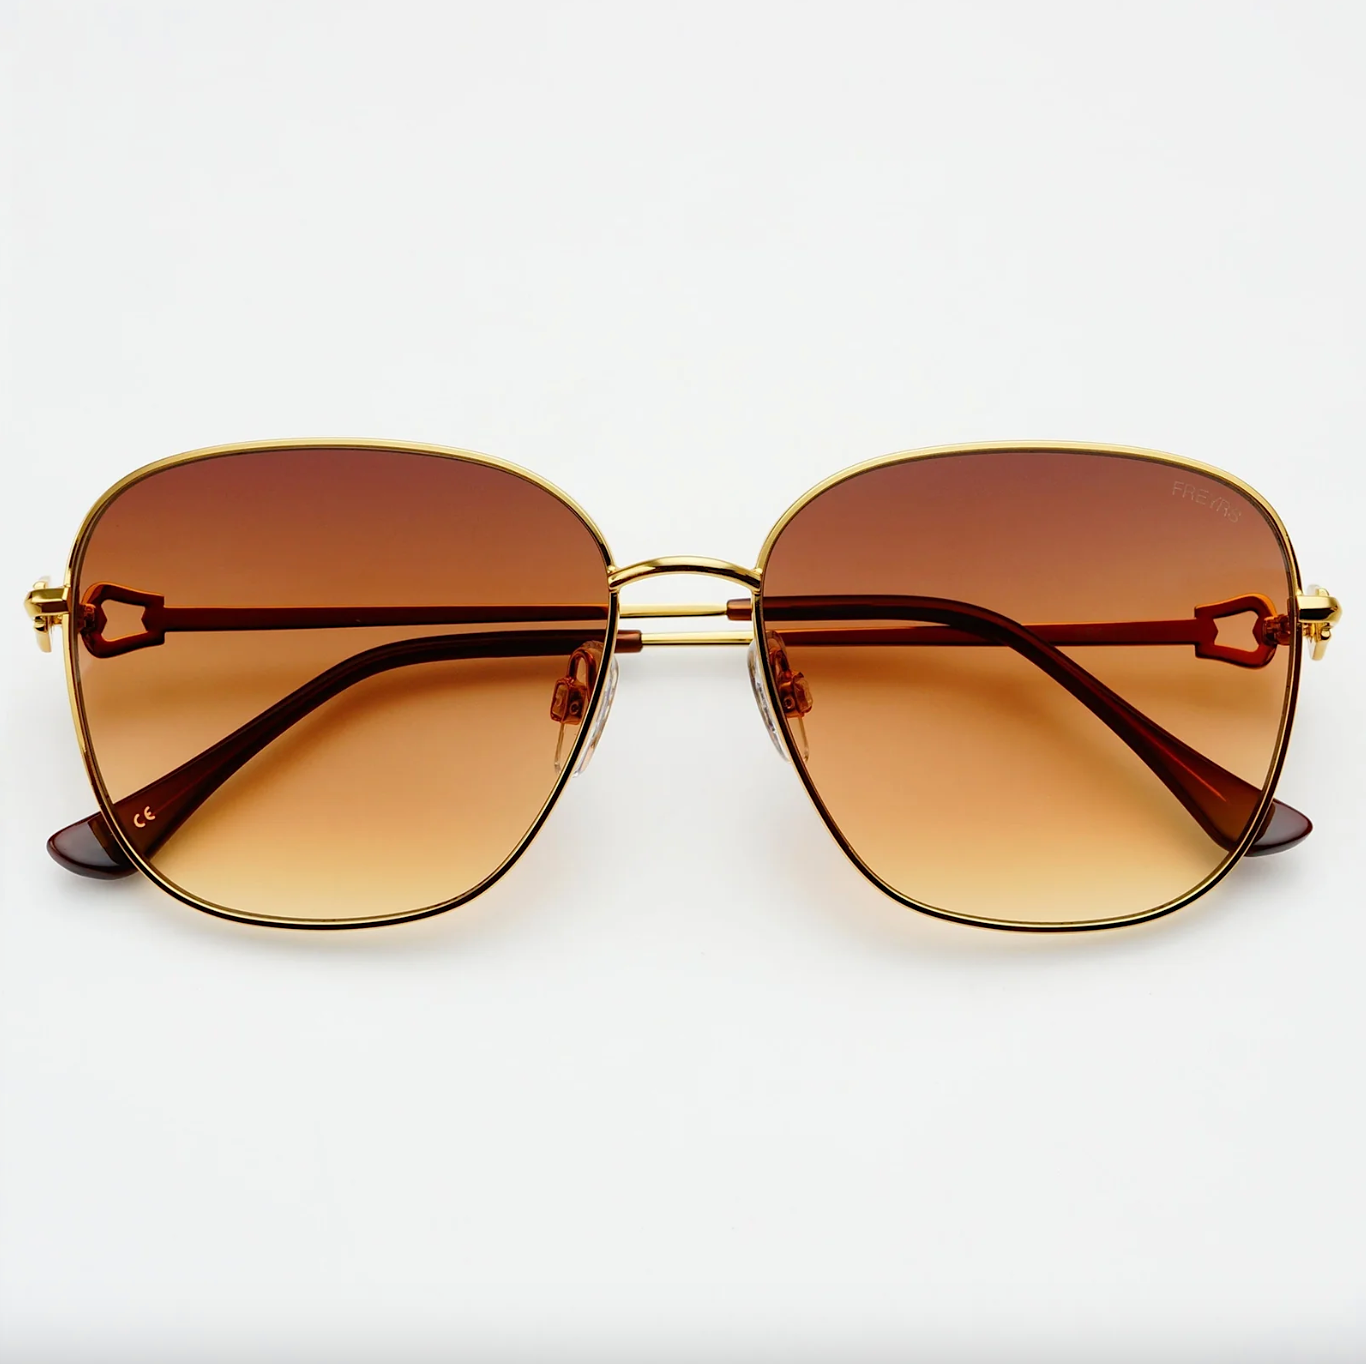 lea freyrs sunglasses